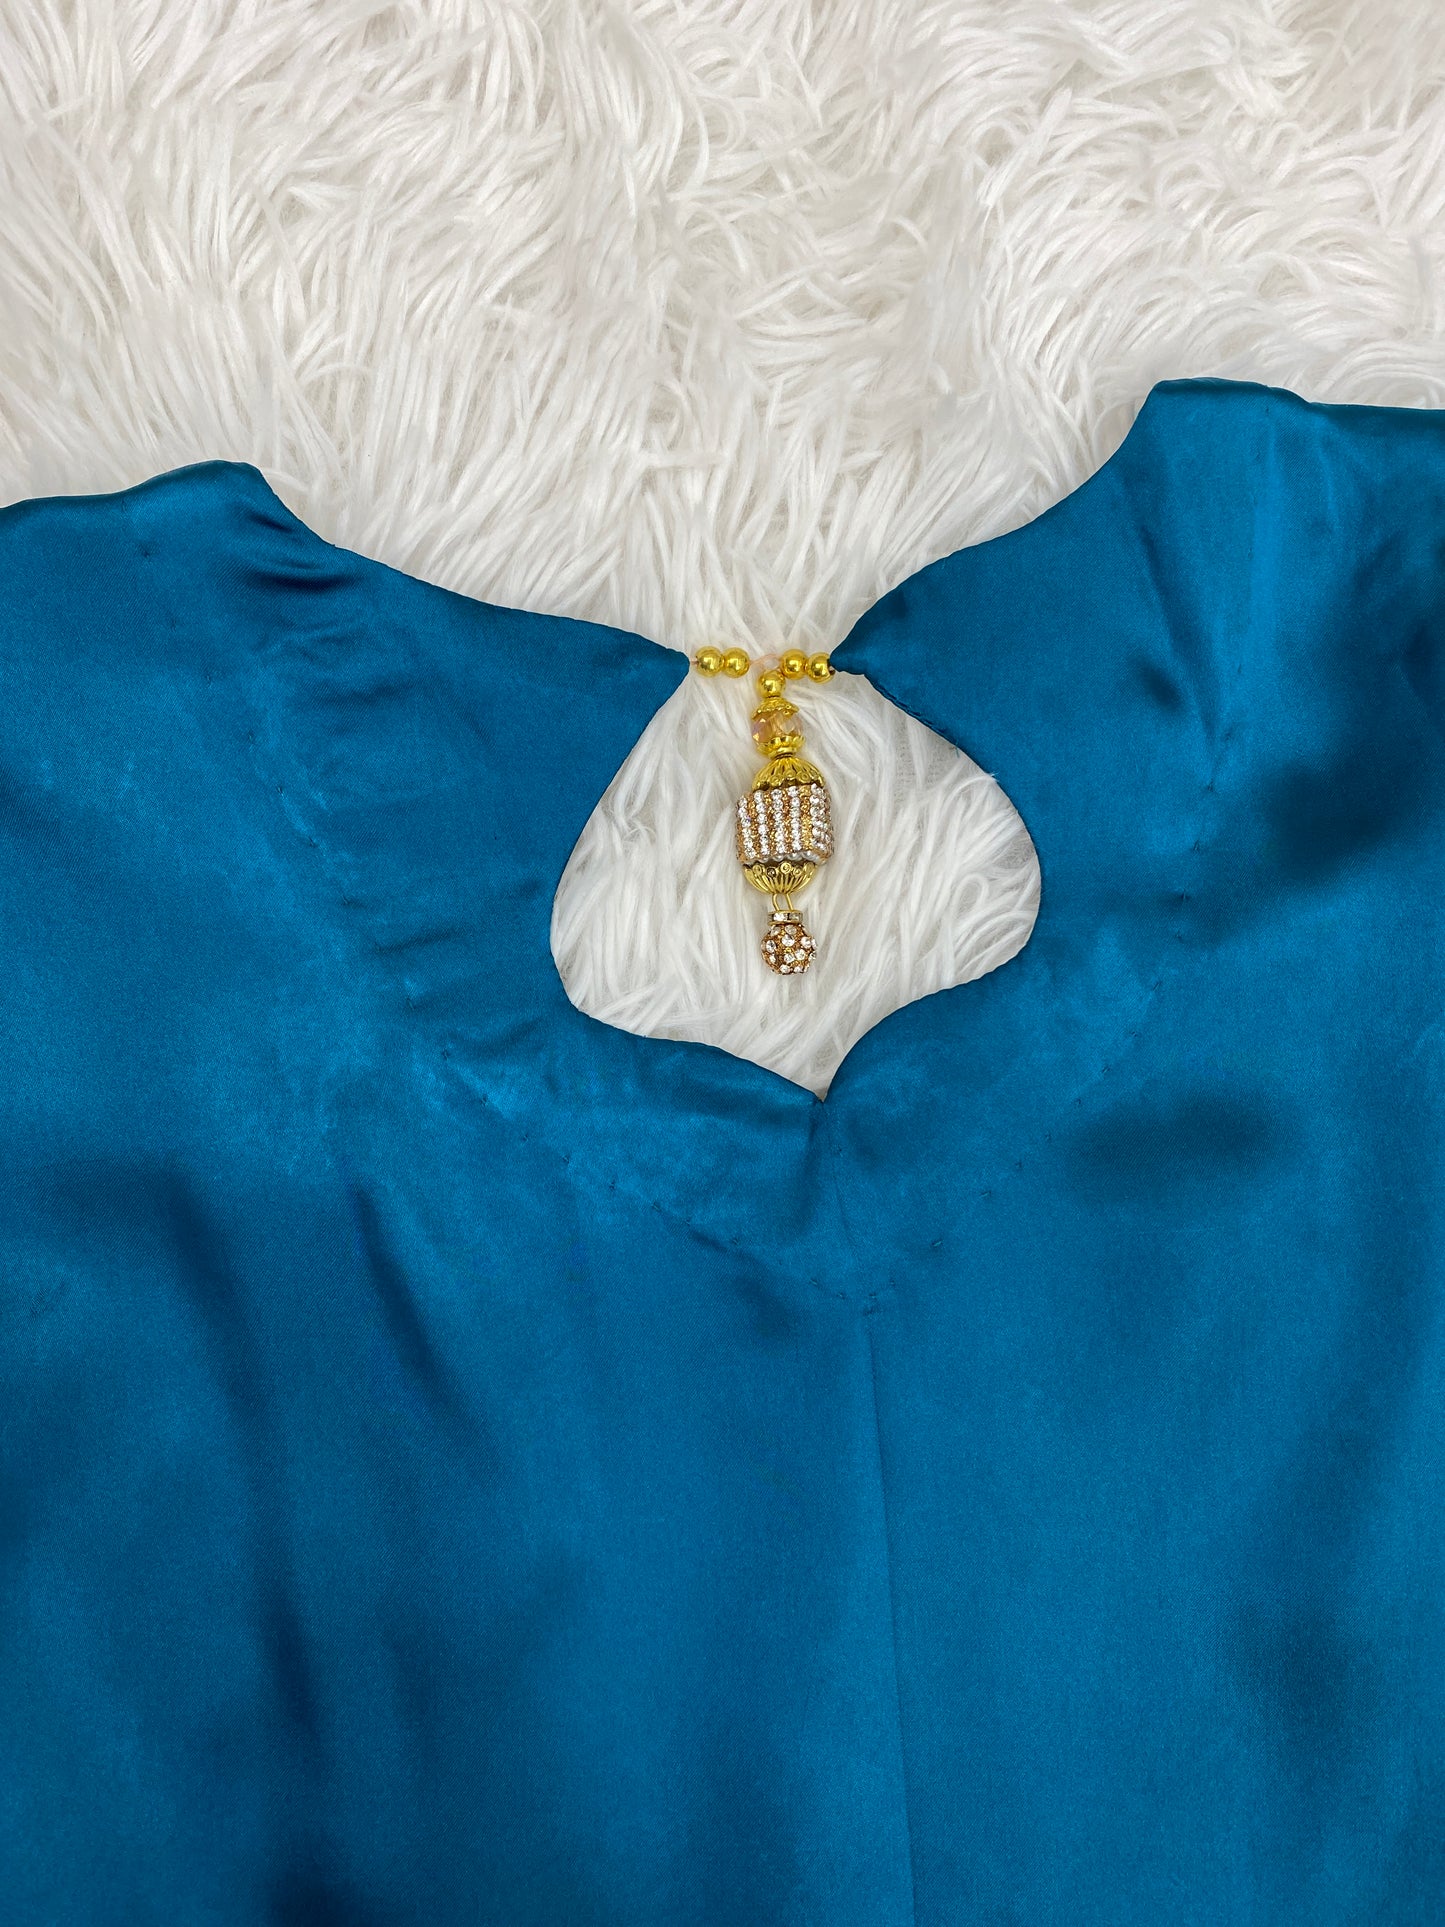 Luxury Blue Georgette/Silk Gharara Outfit 3PC